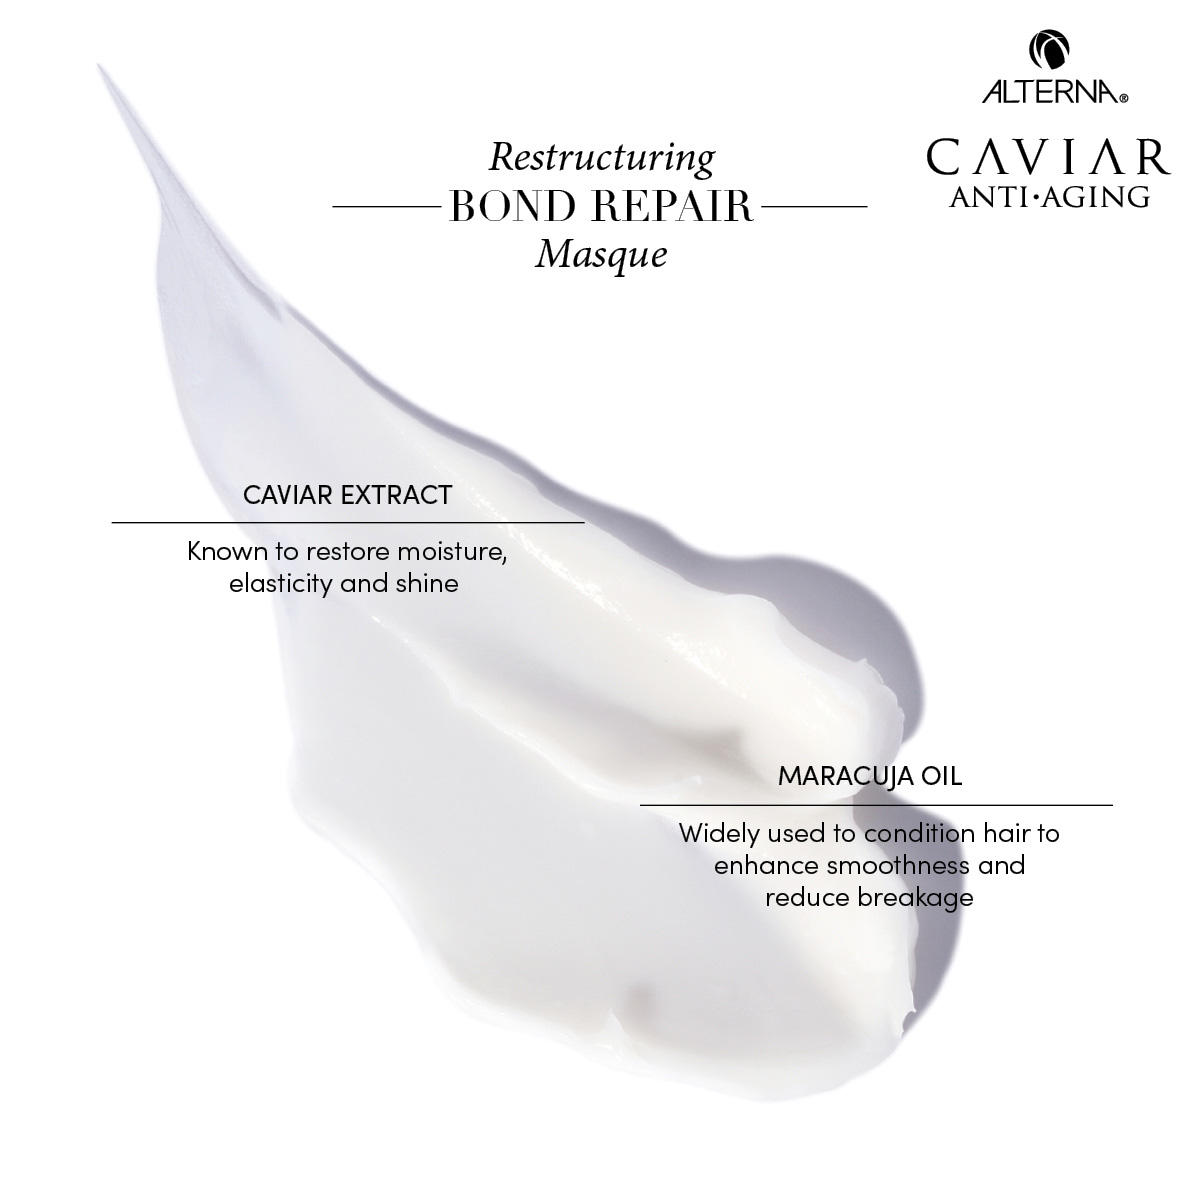 Alterna Caviar Anti-Aging Restructuring Bond Repair Maschera 169 g - 4